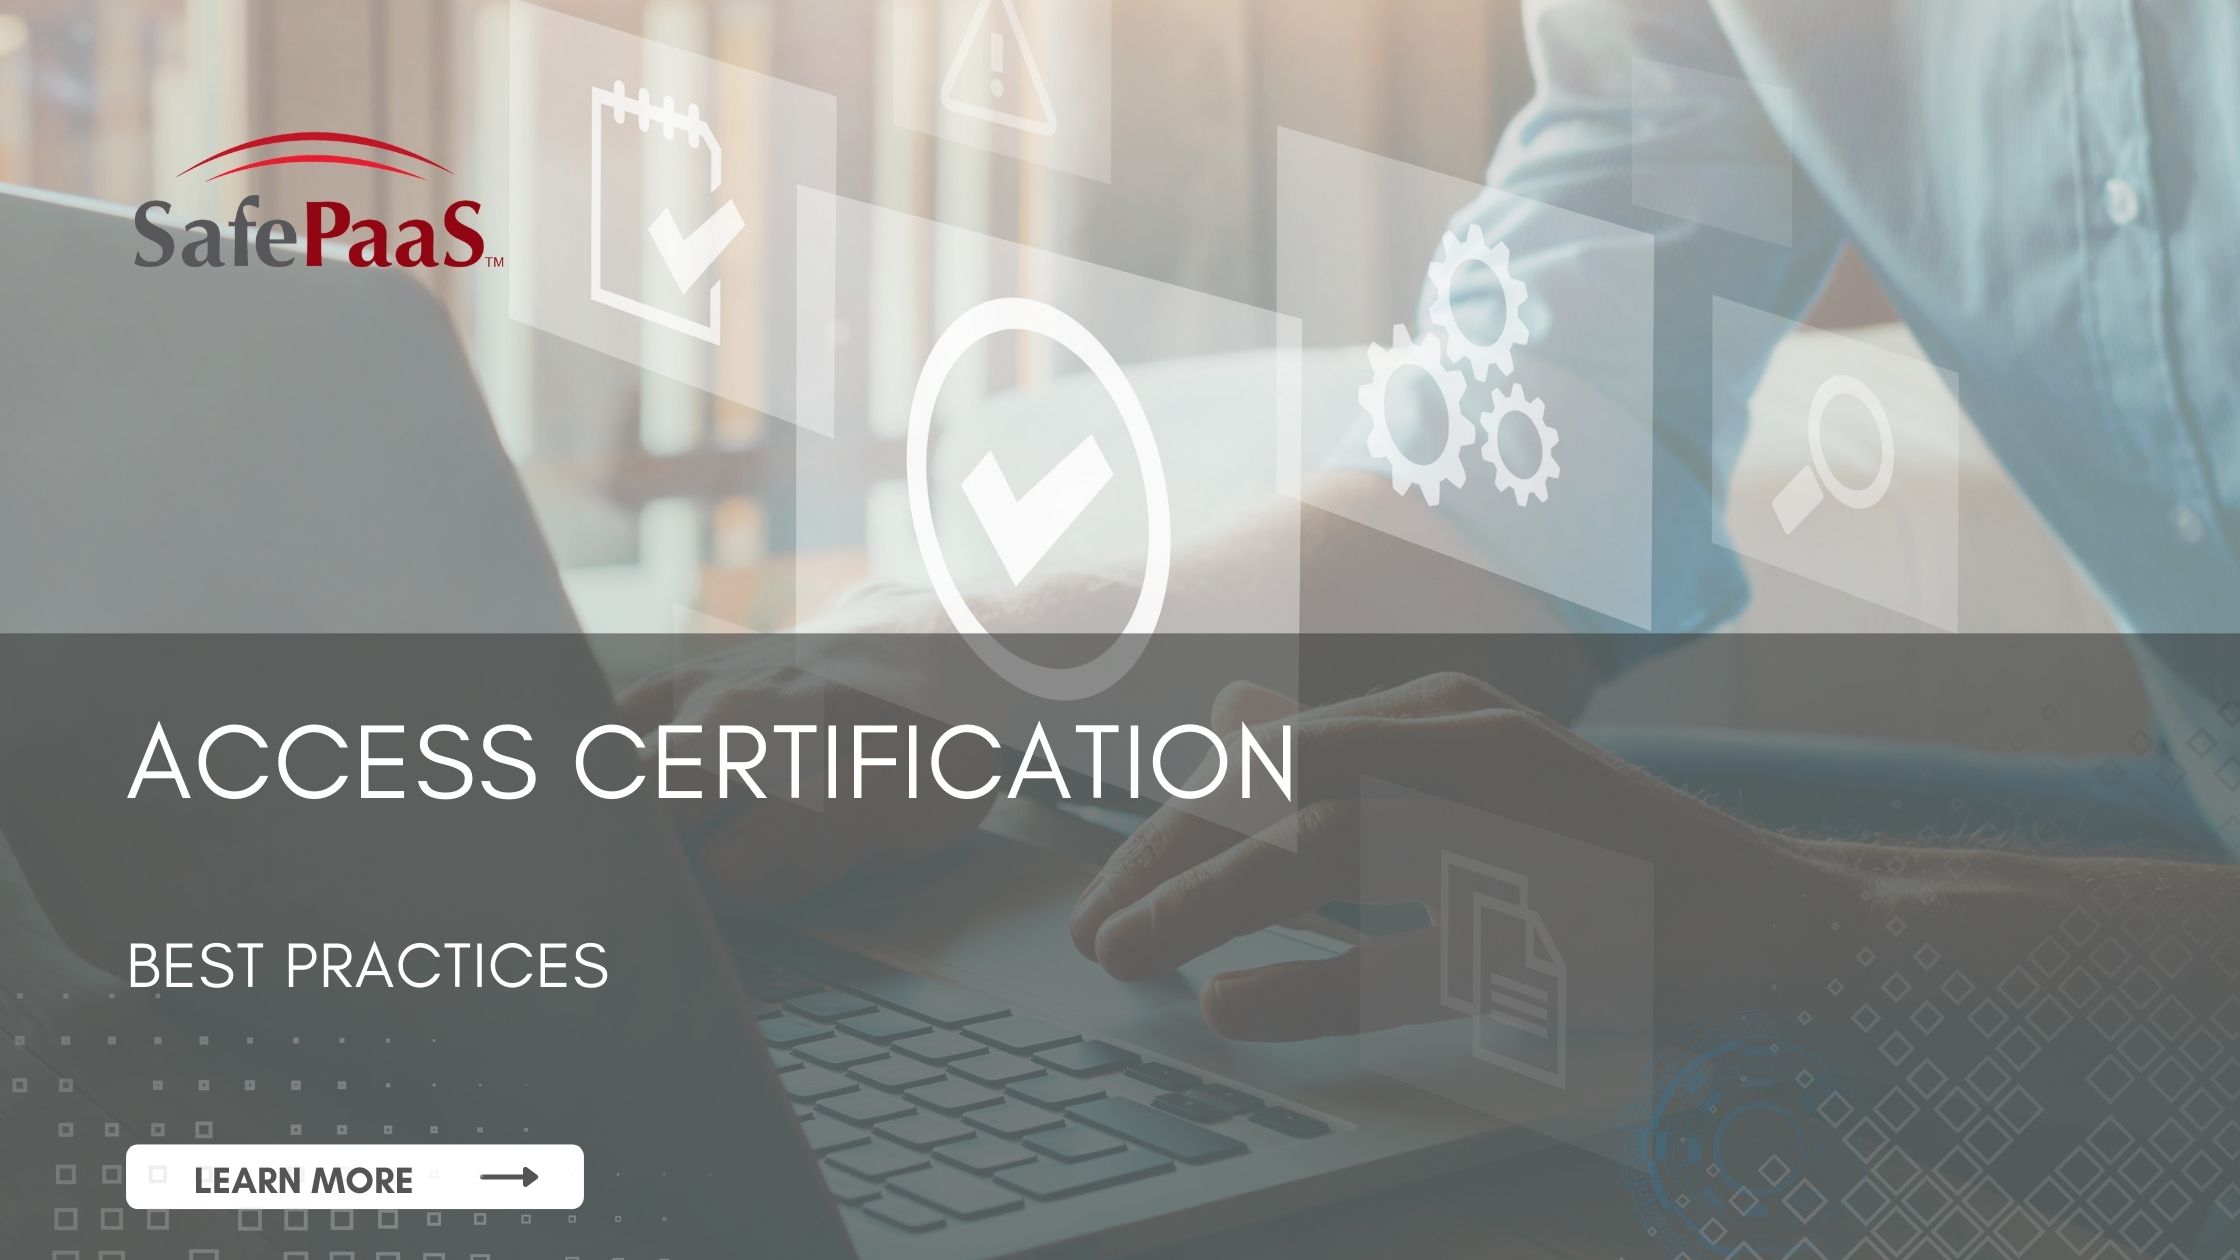 Access Certification - Best Practices